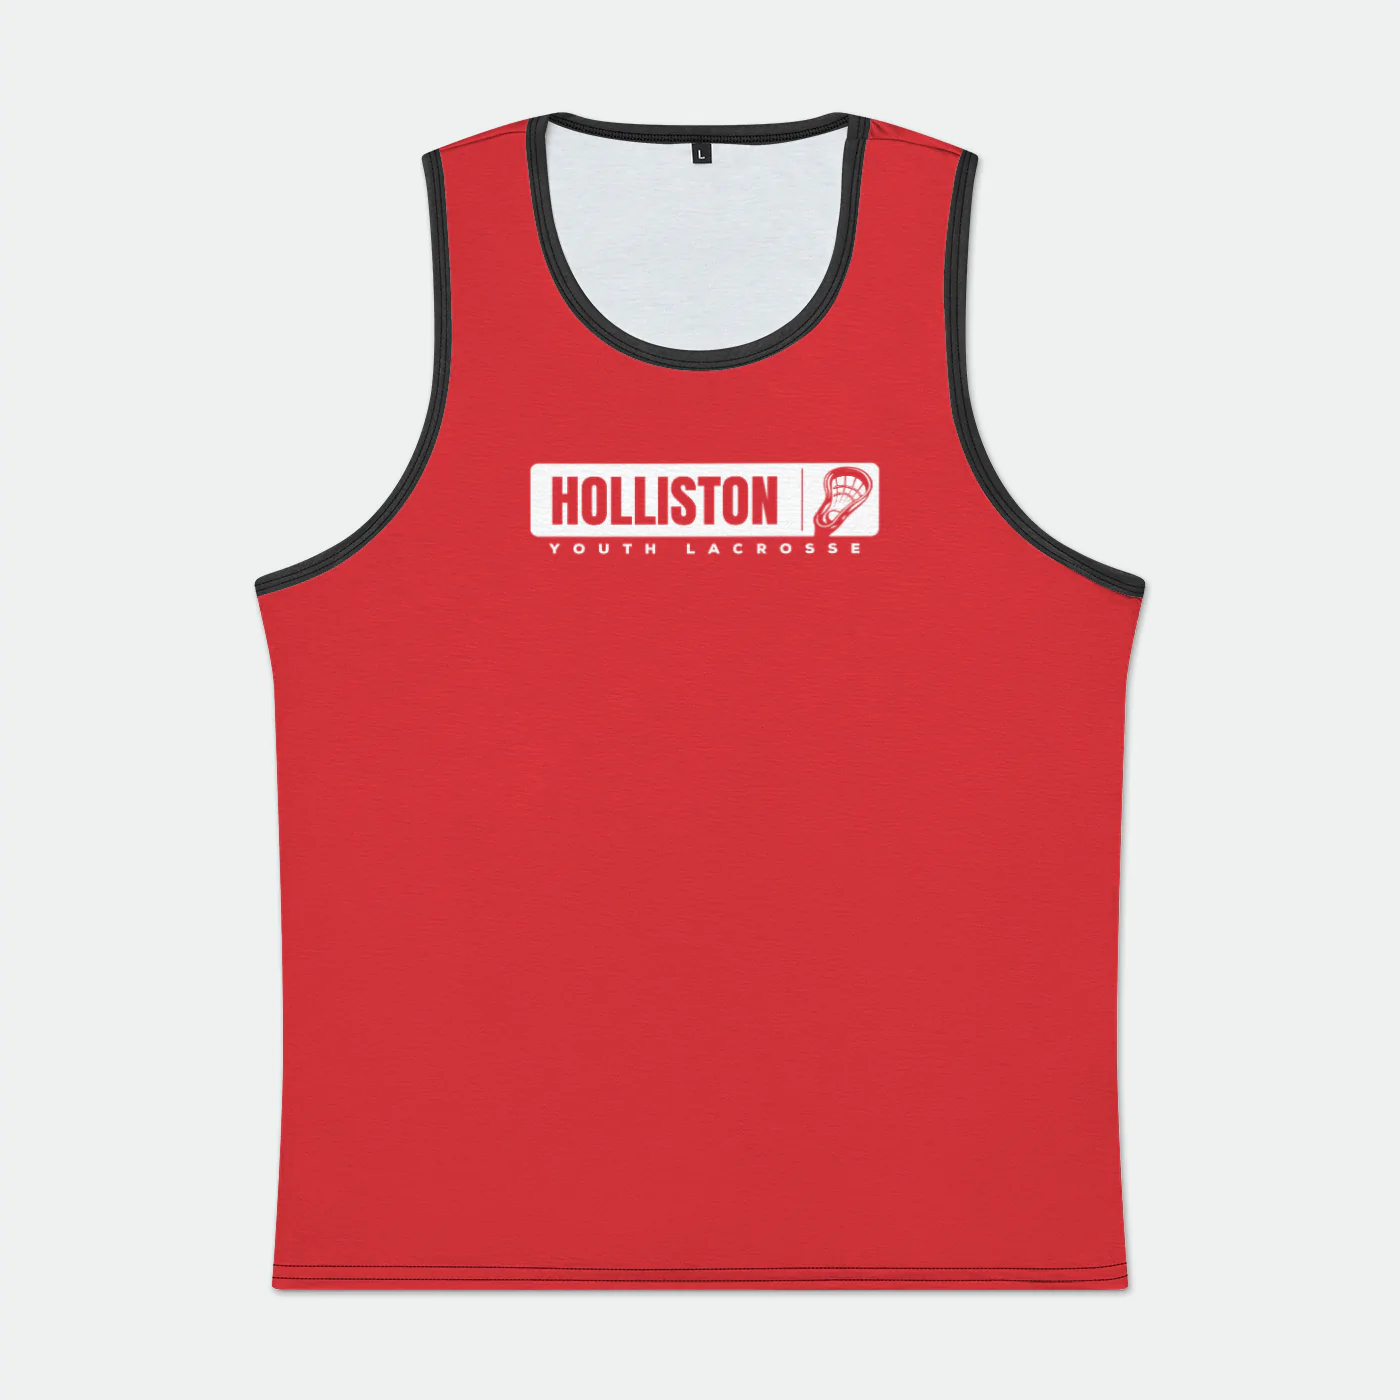 Holliston Youth Lacrosse Adult Men's Tank Top Signature Lacrosse